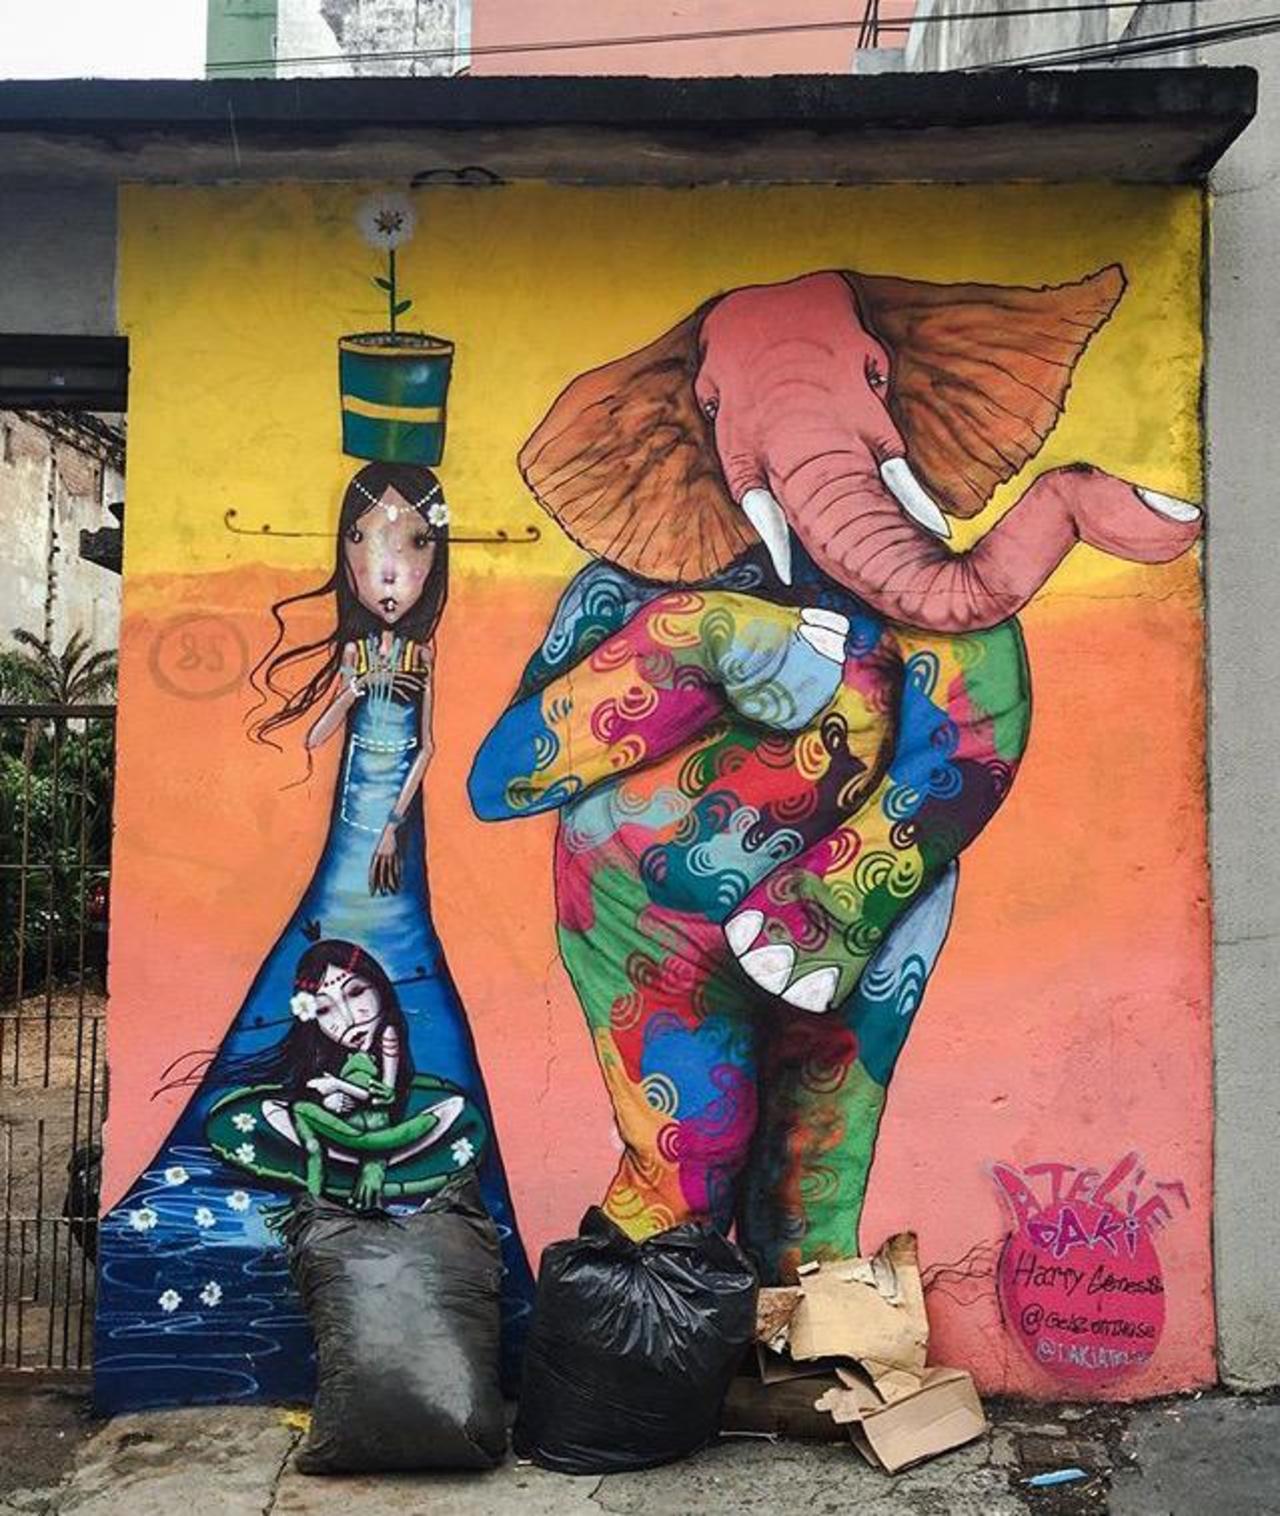 Street Art by Harry Geneis & Gelson in São Paulo 

#art #mural #graffiti #streetart http://t.co/C30psDcjBq